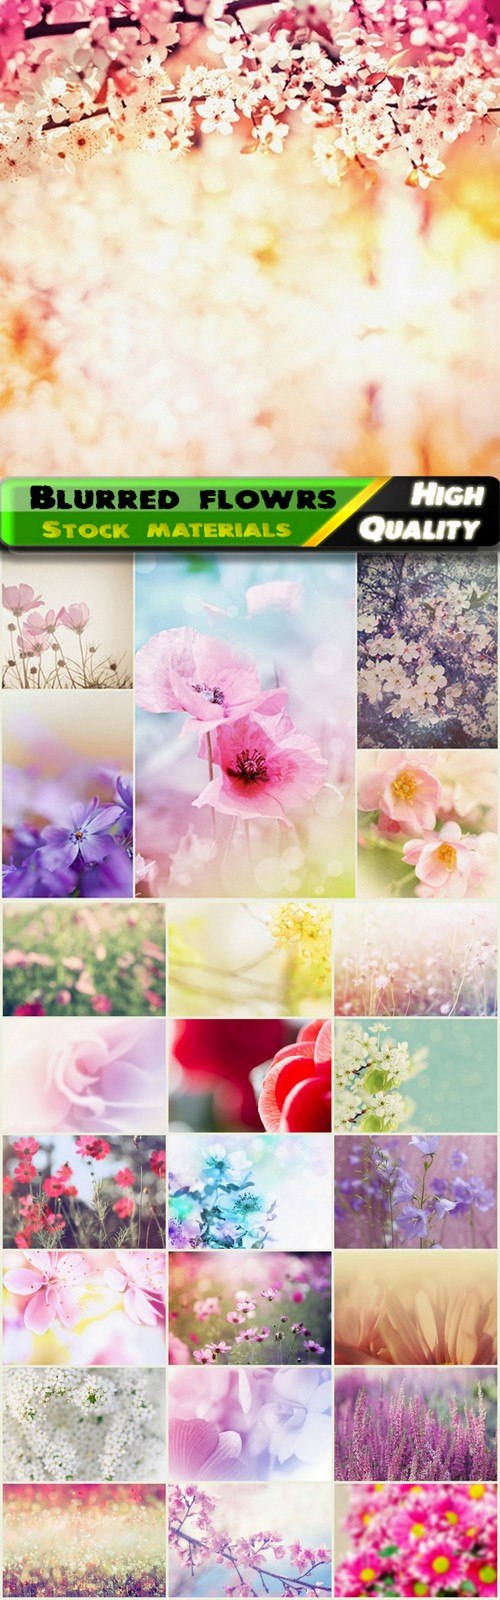 Cute blurred floral backgrounds - 24 HQ Jpg